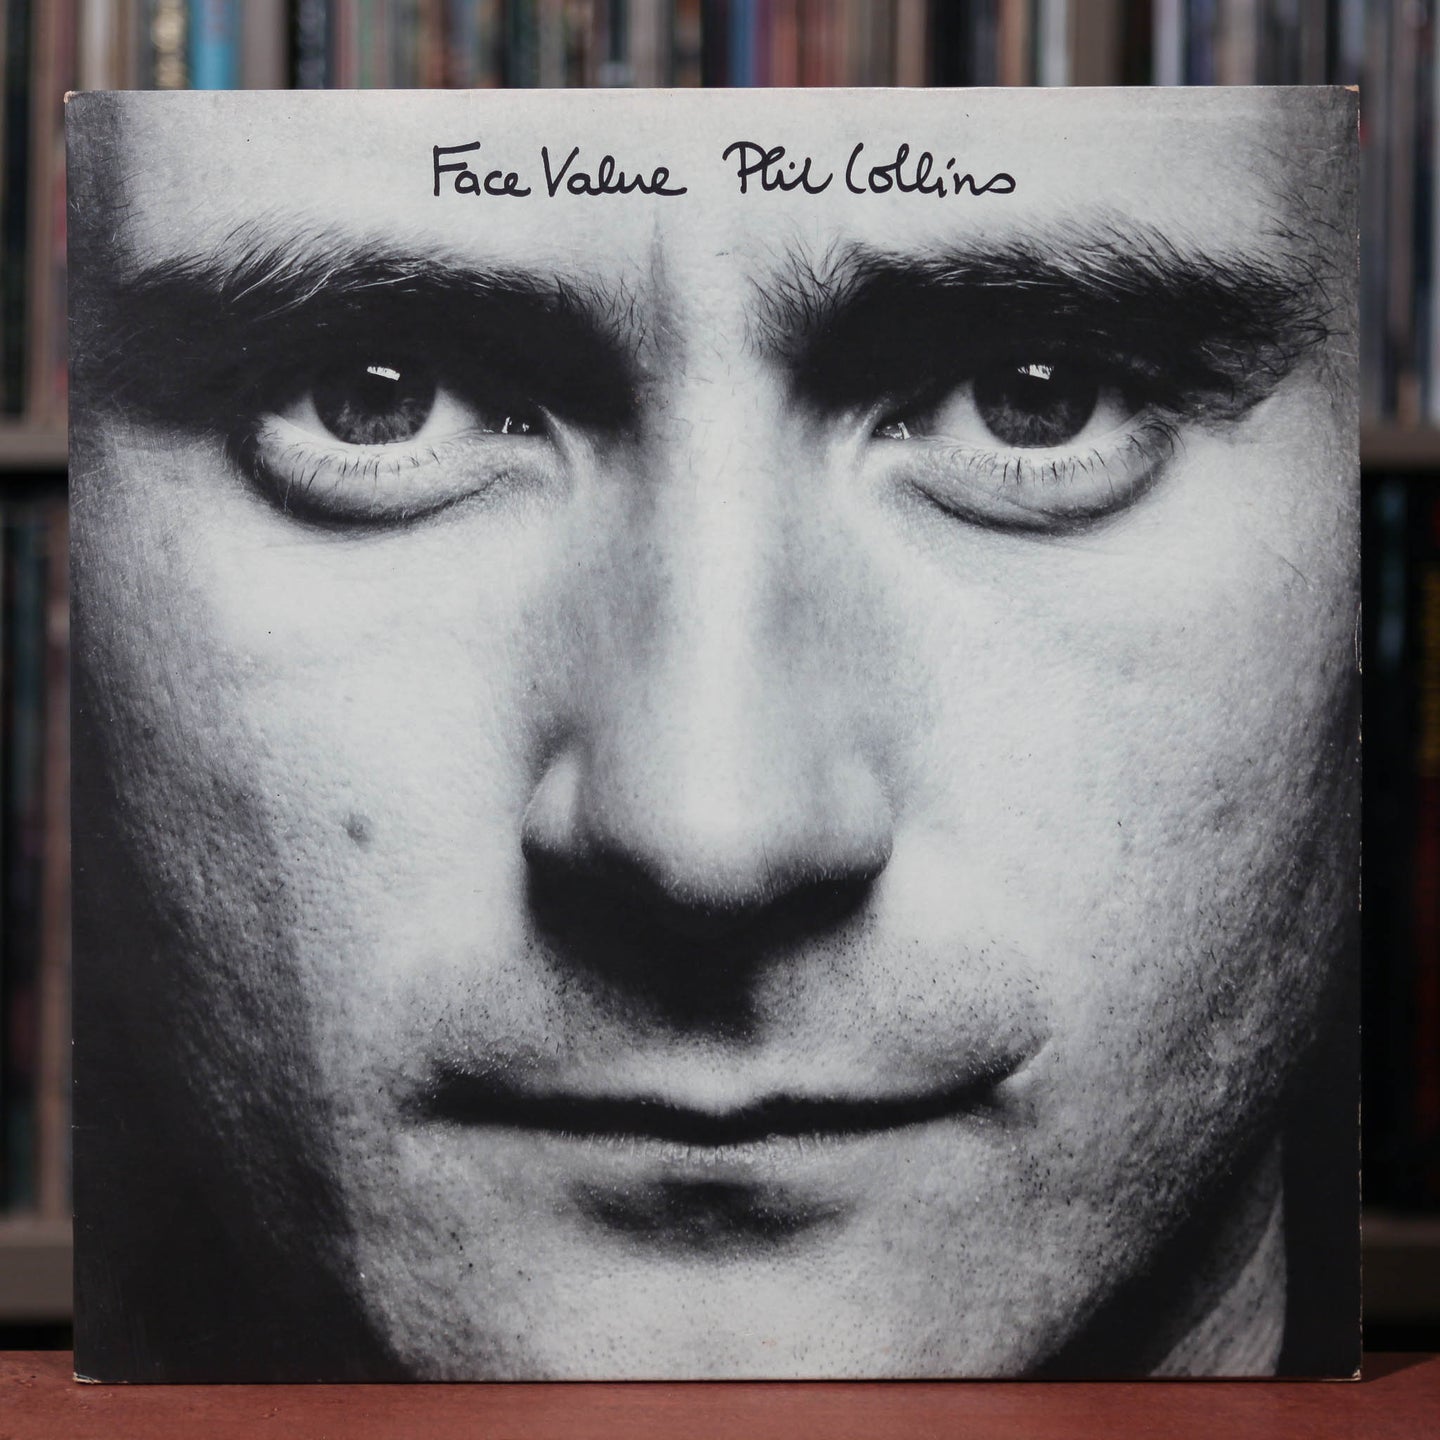 Phil Collins - Face Value - 1981 Atlantic, VG+/VG+